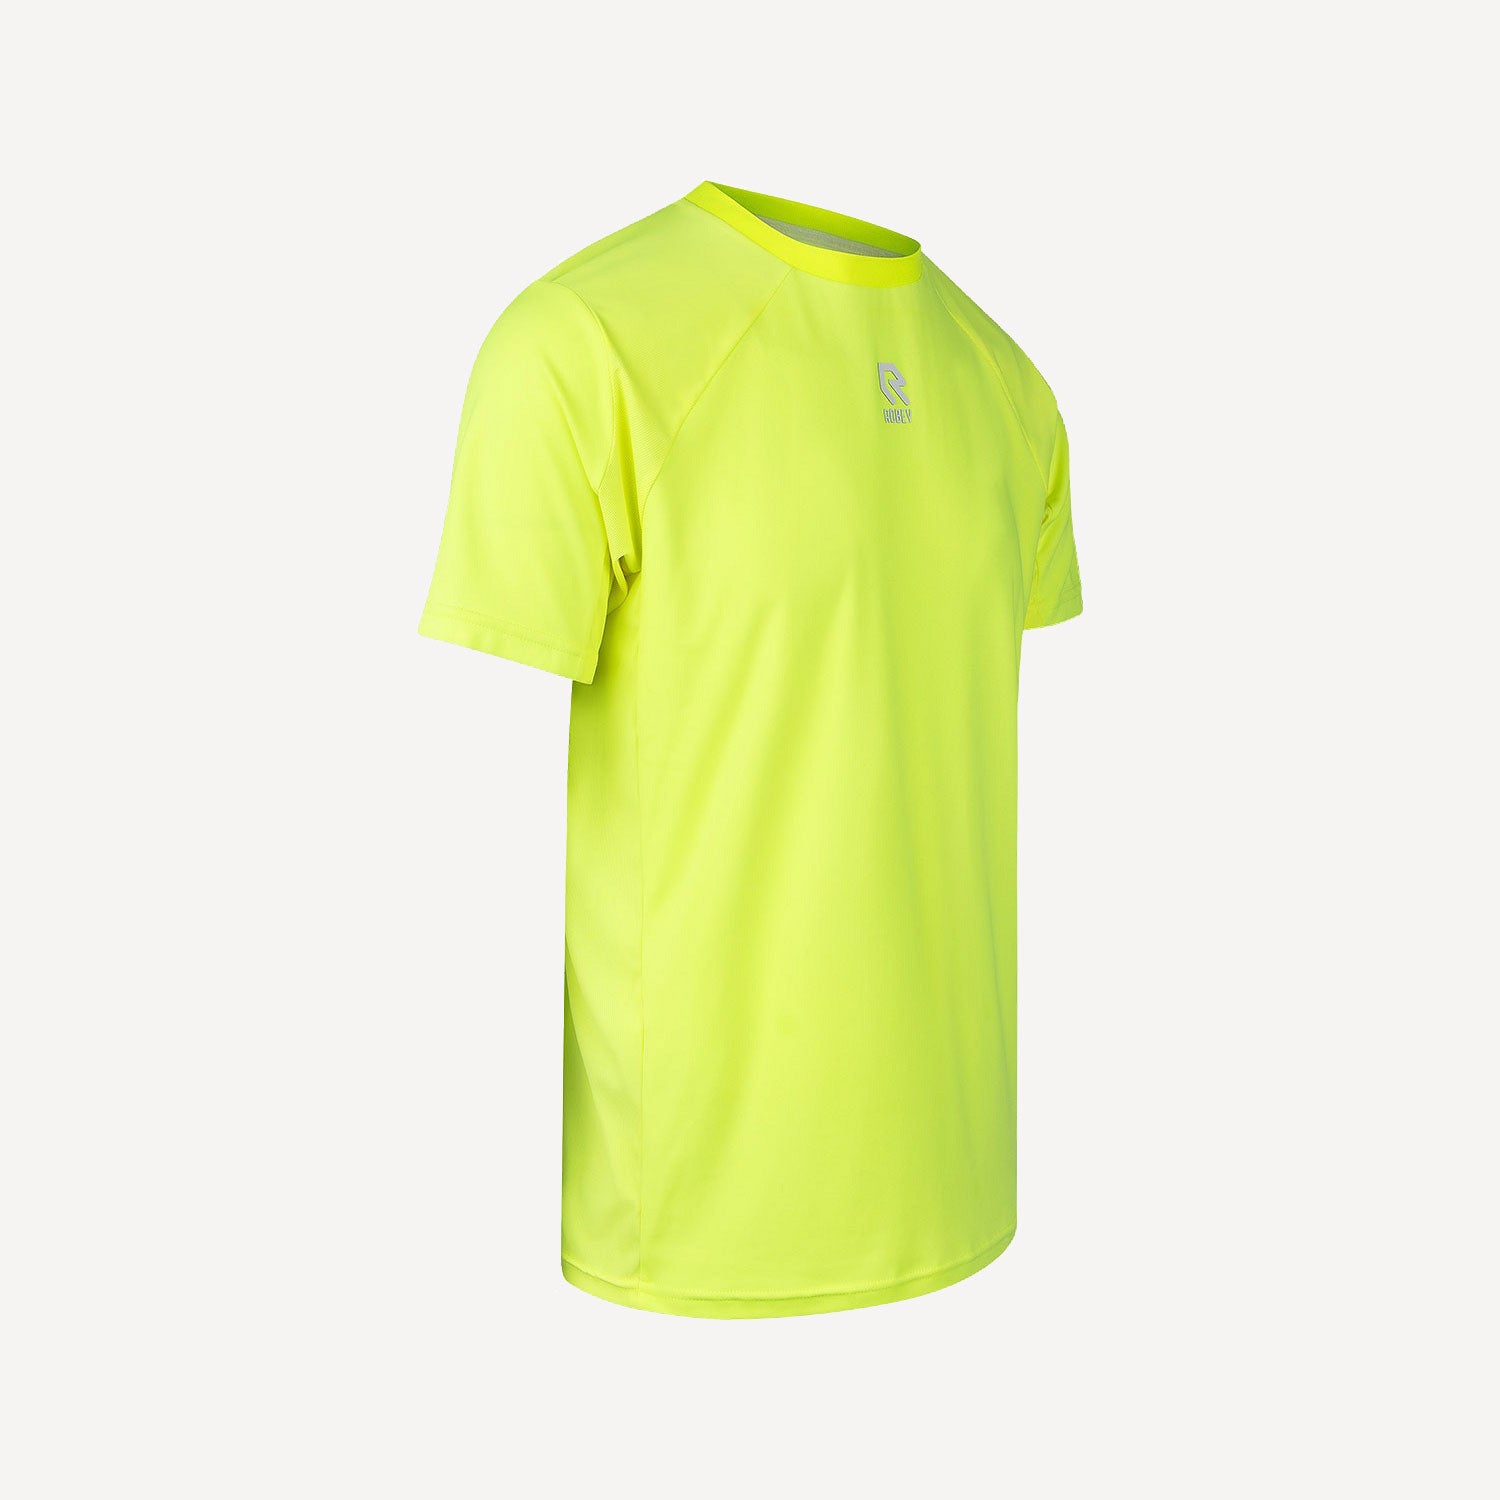 Robey Ace Men's Tennis Shirt - Yellow (3)